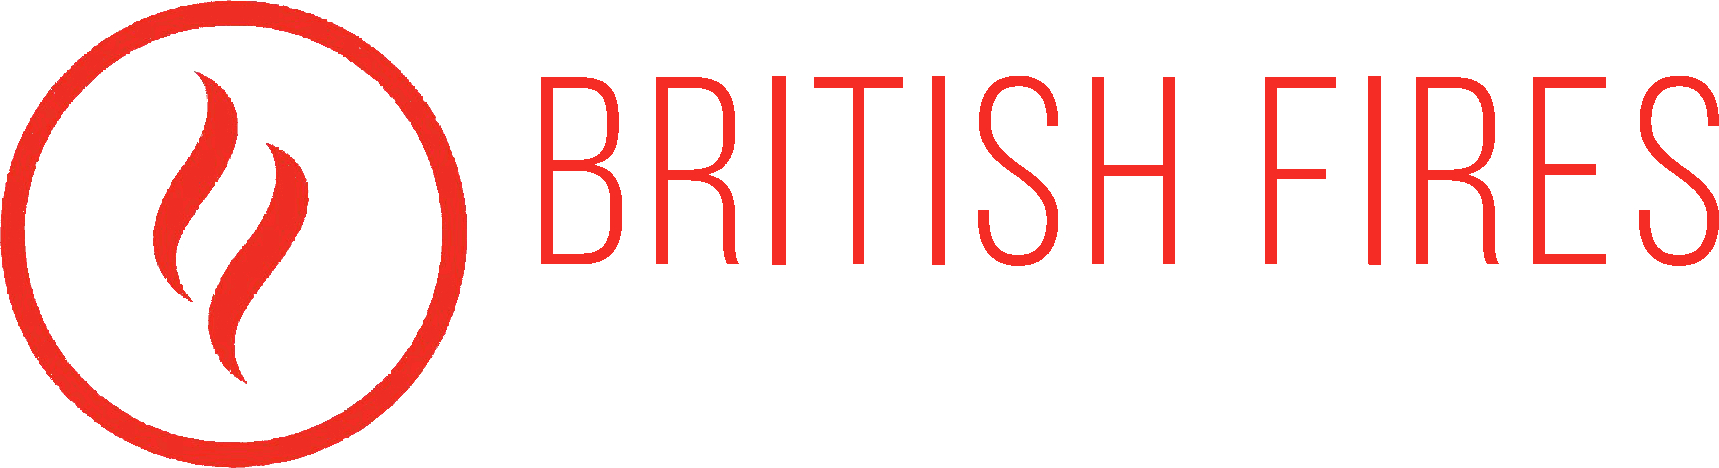 Logo British Fires